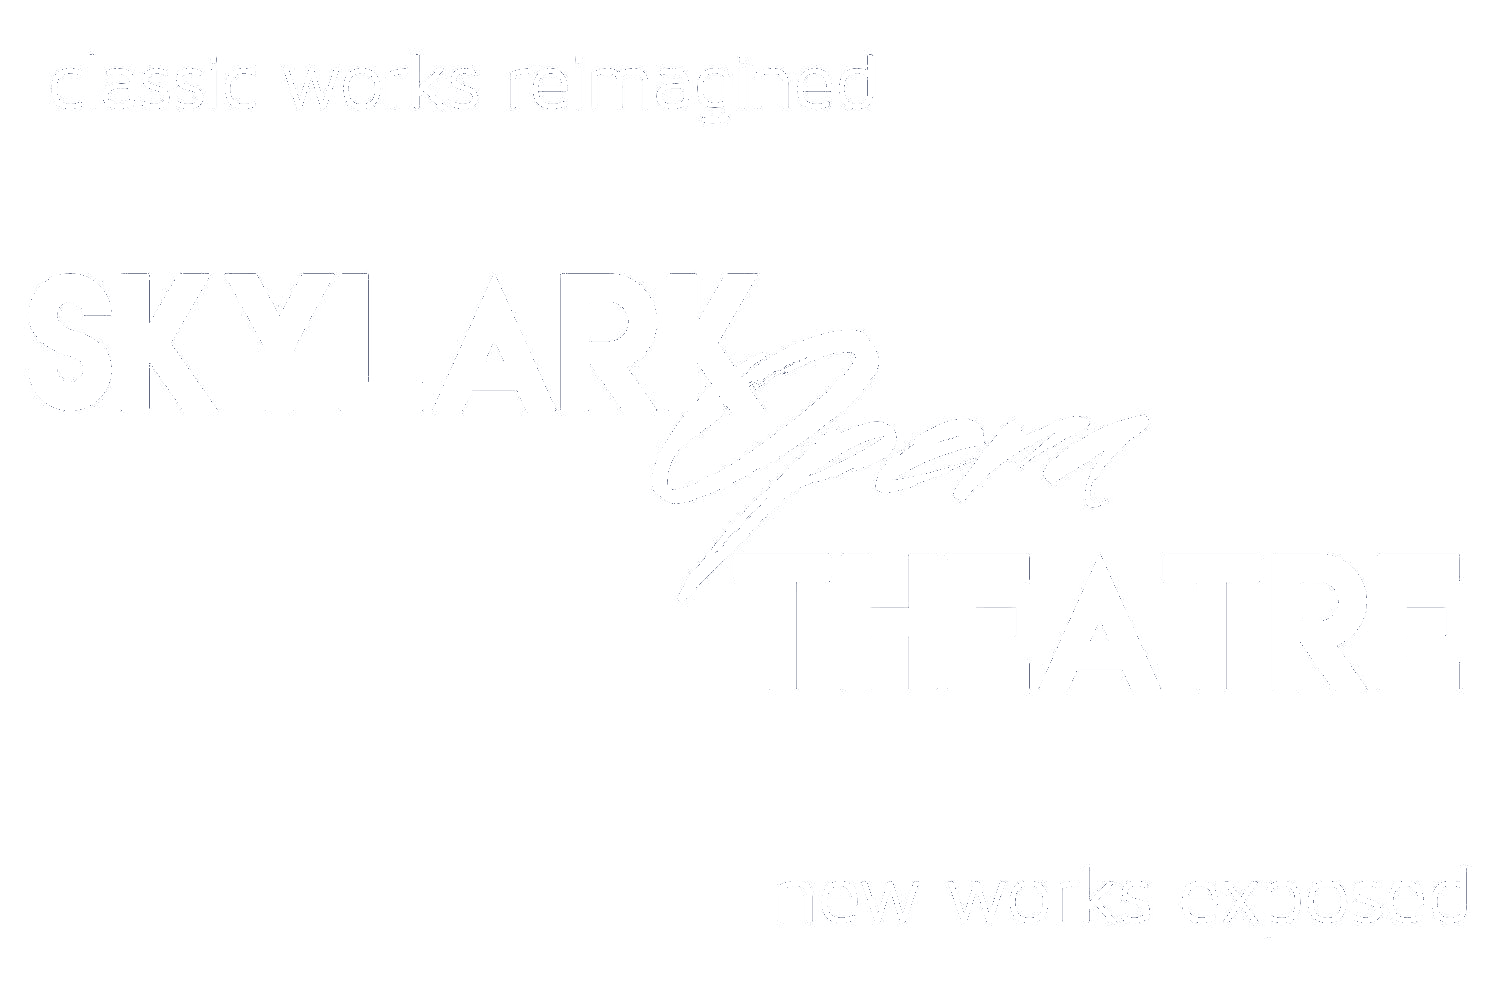 Skylark Opera Theatre